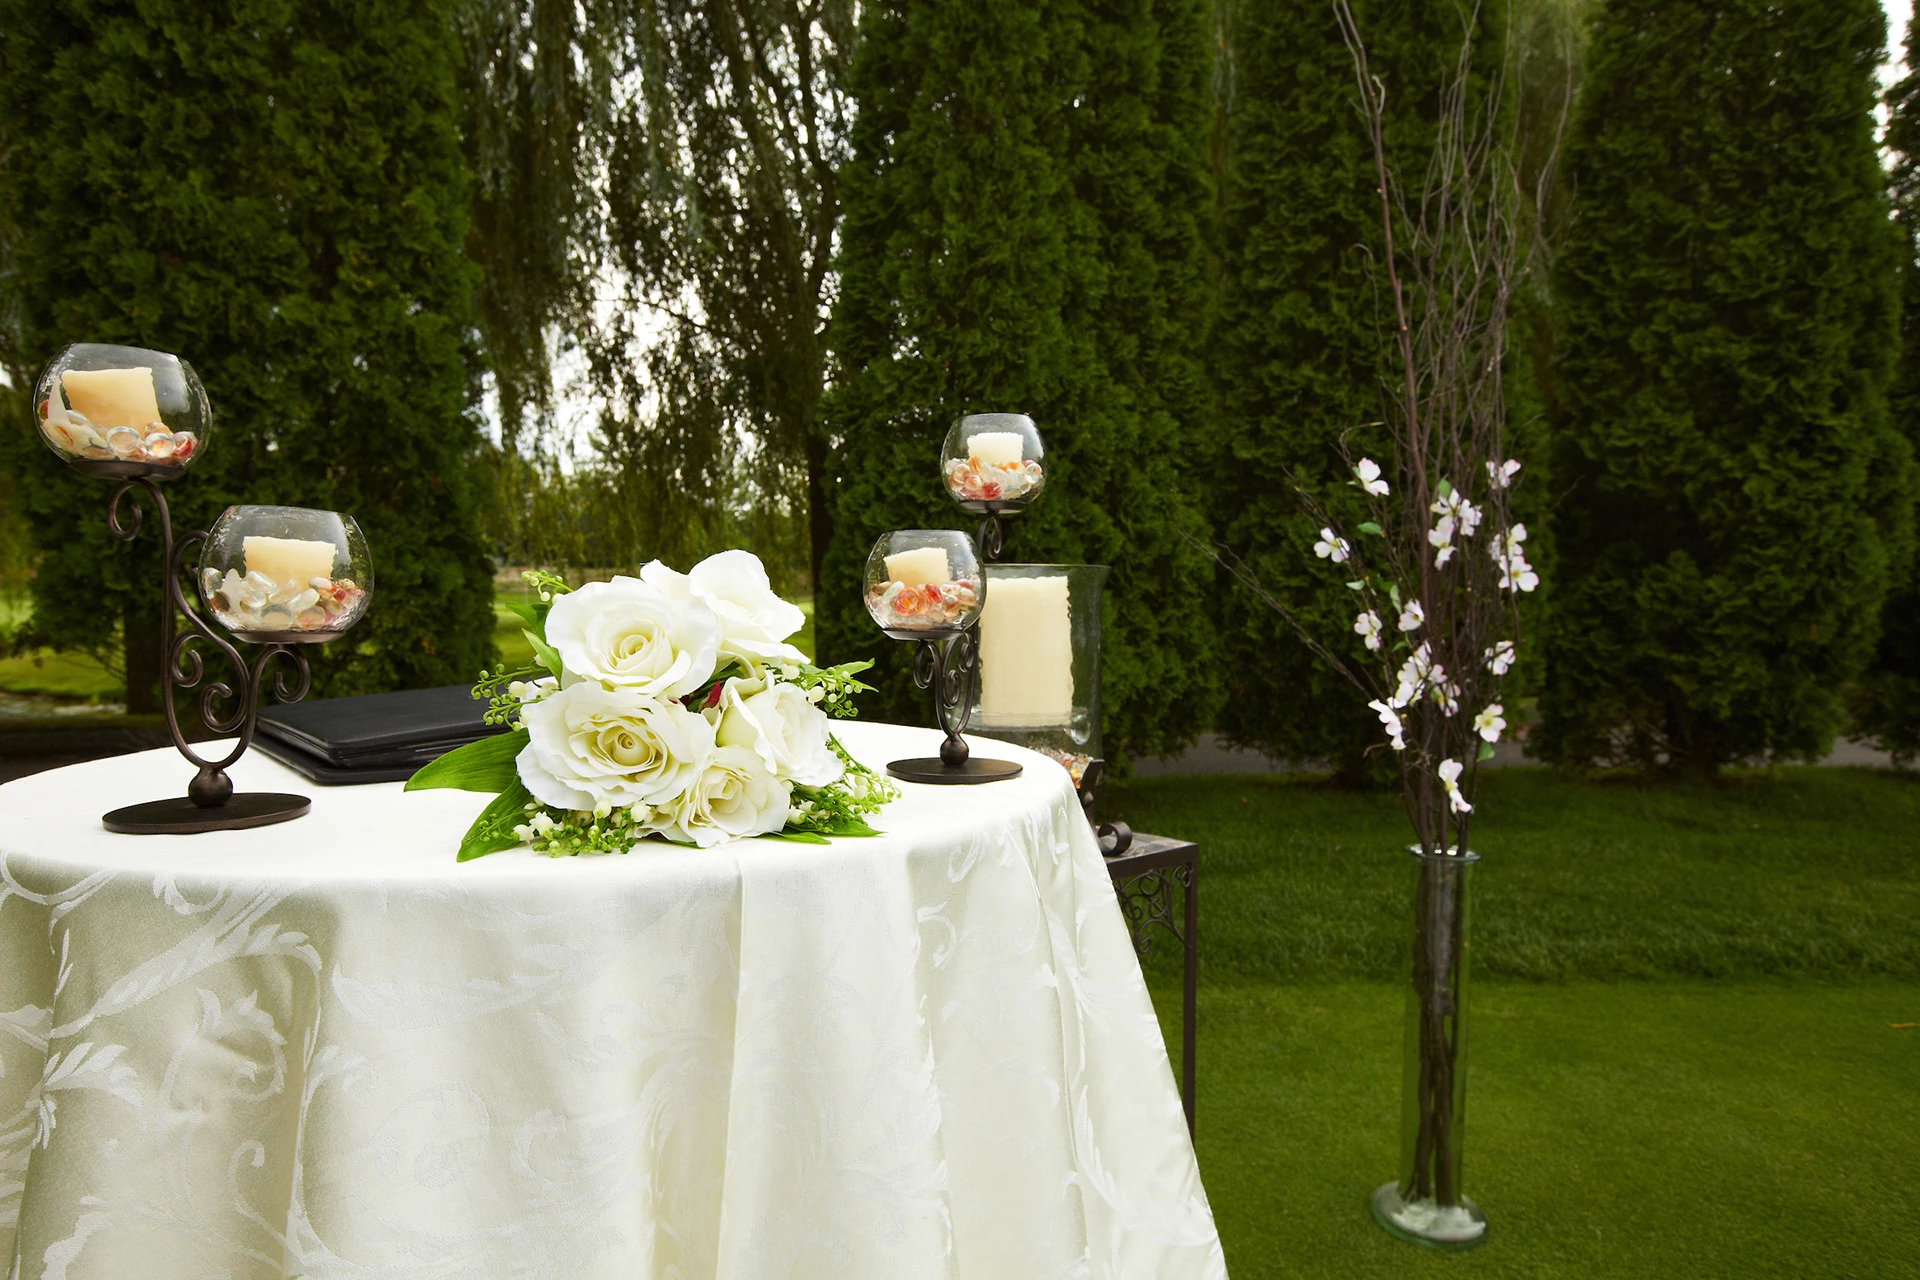 Willow Creek Golf Club - Outdoor Wedding Set